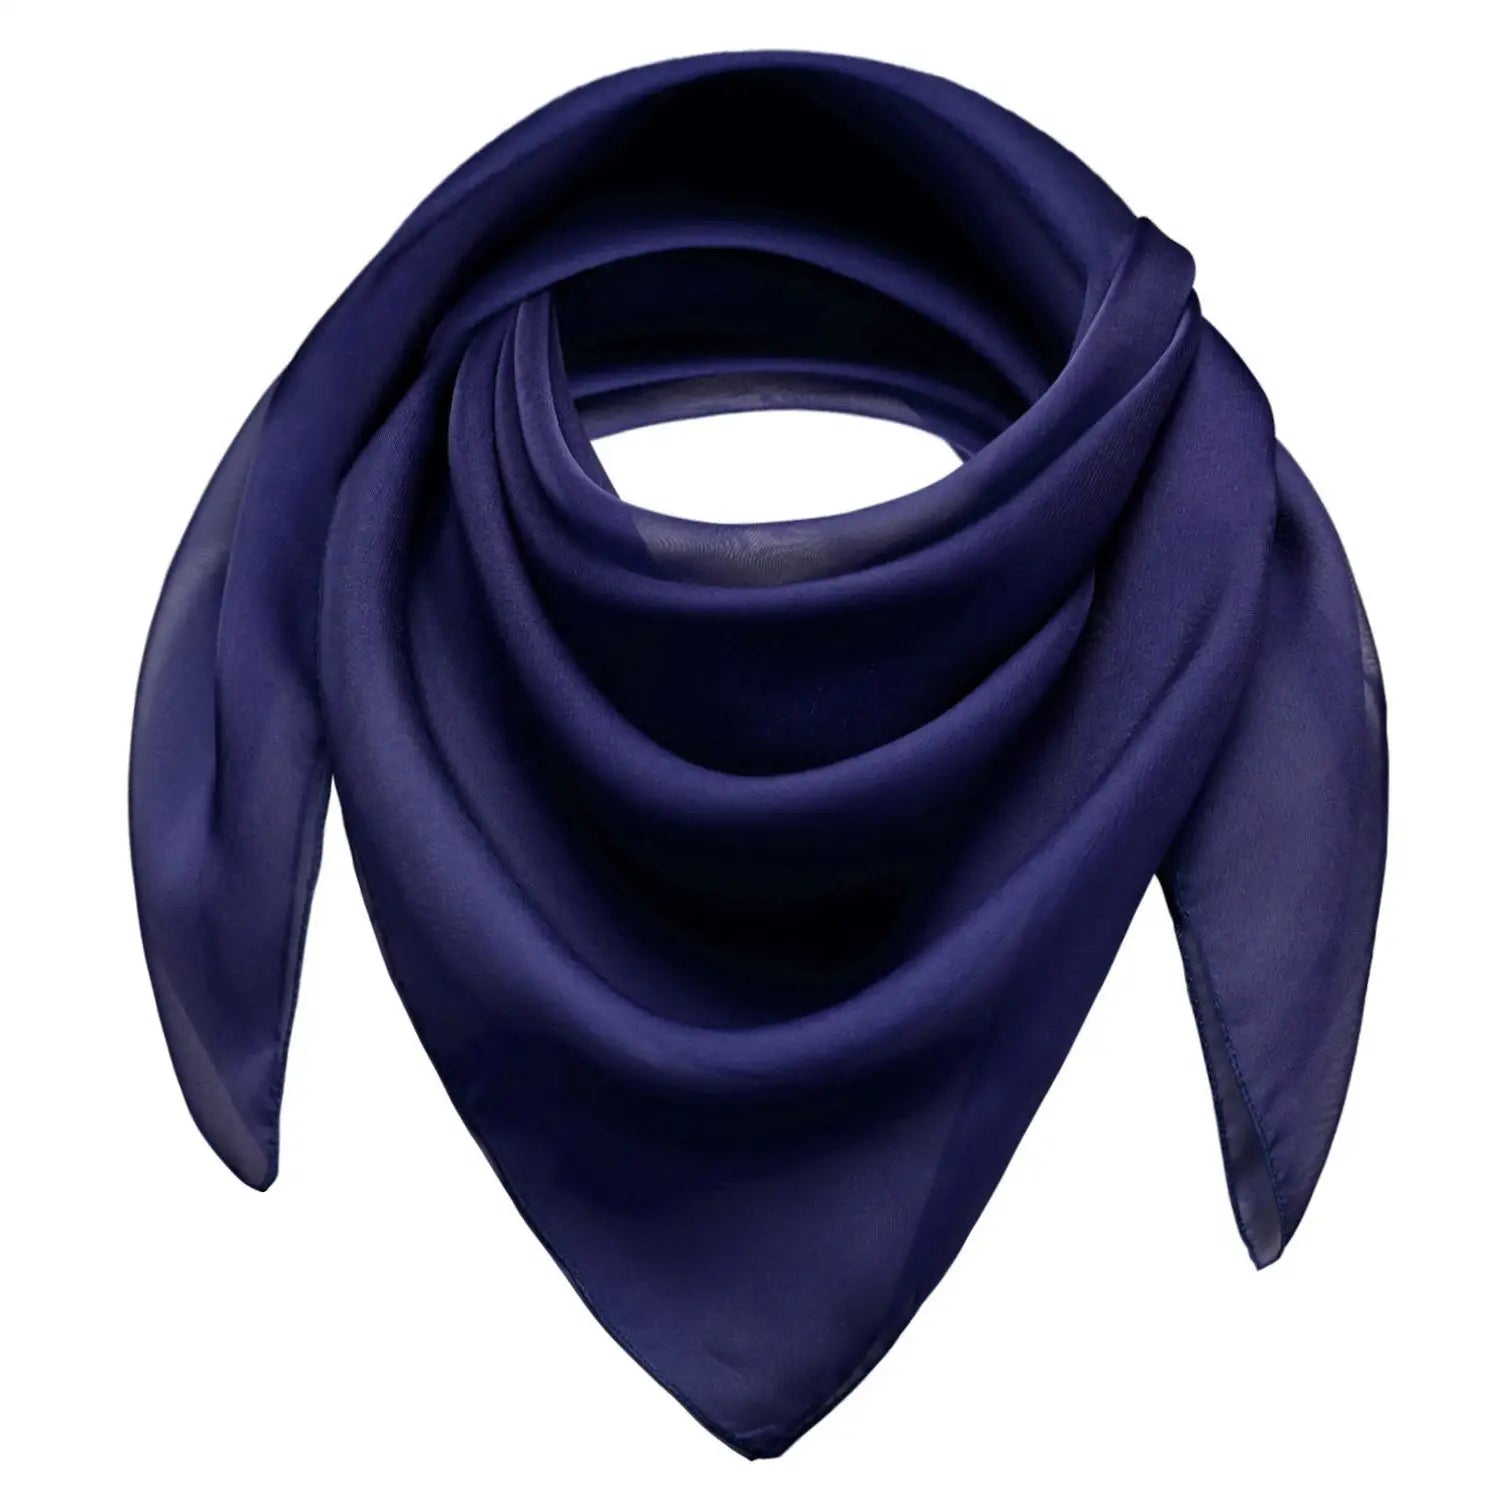 Navy blue chiffon square scarf on white background